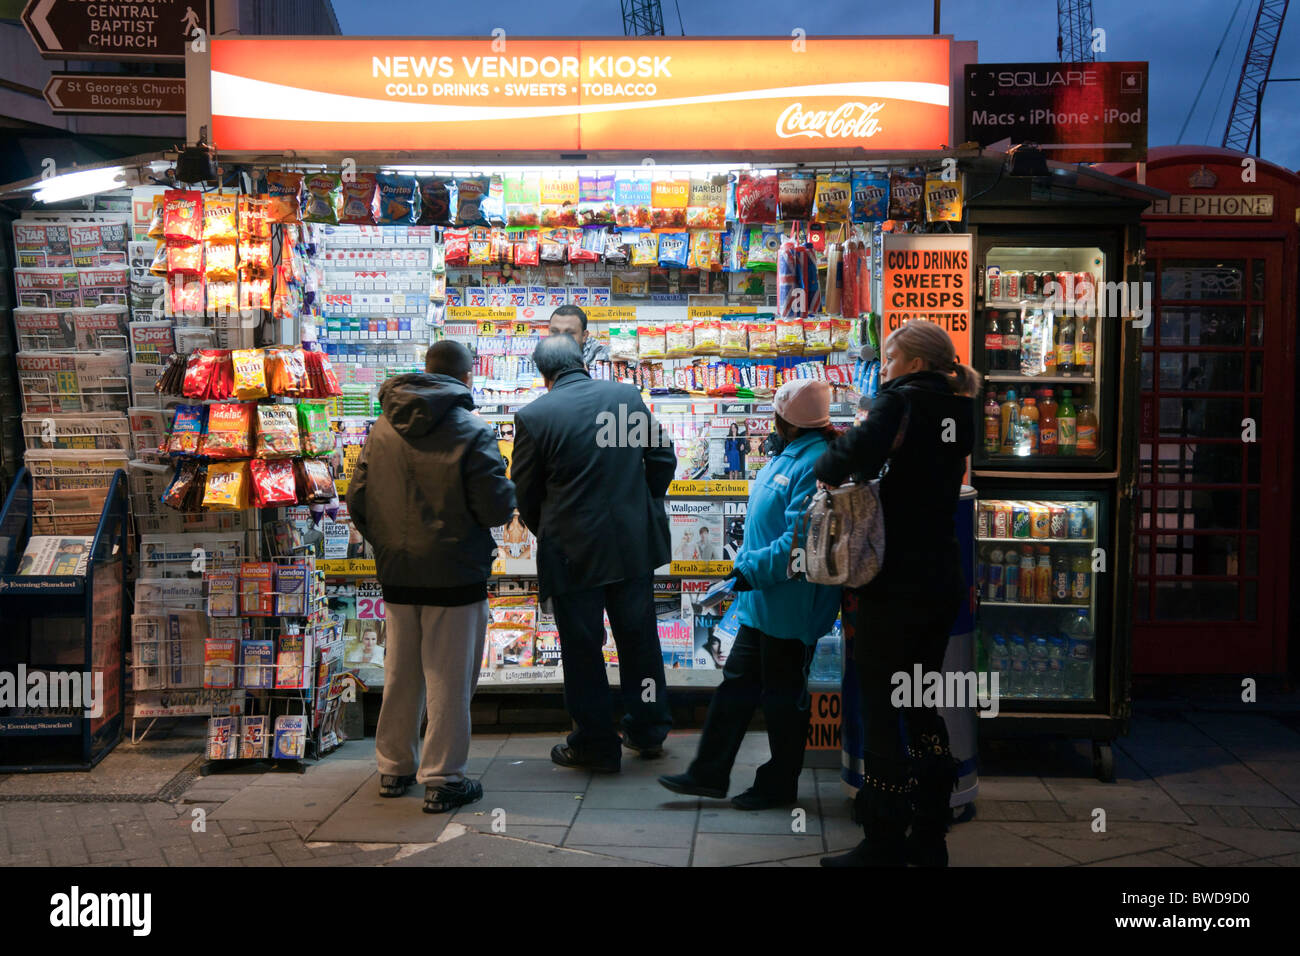 News vendor Kiost - Oxford Street - London Stock Photo